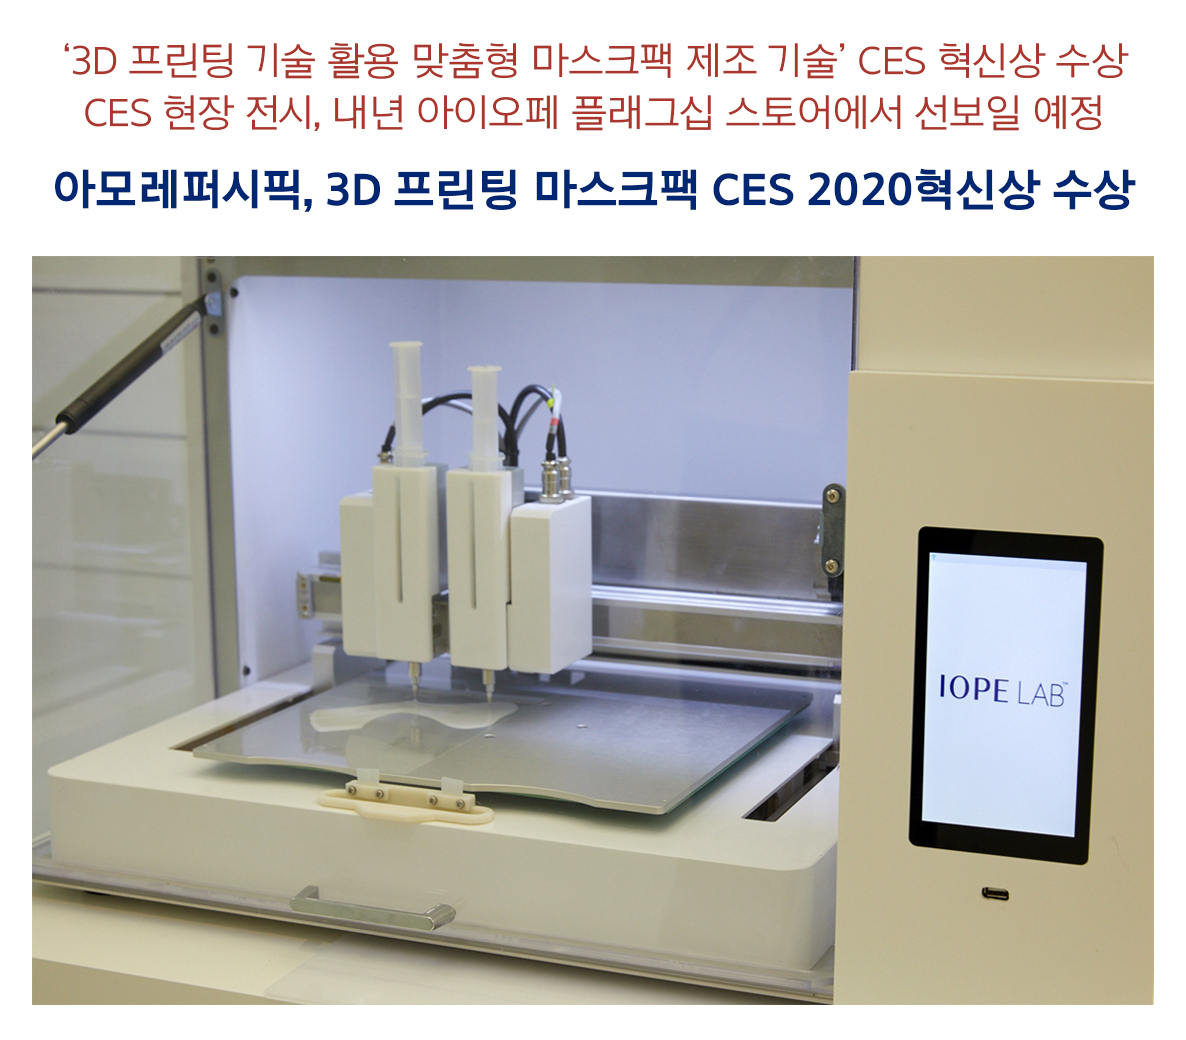 '3D 프린팅 기술 활용 맞춤형 마스크팩 제조 기술' CES 혁신상 수상 CES 현장 전시, 내년 아이오페 플래그십 스토어에서 선보일 예정 아모레퍼시픽, 3D 프린팅 마스크팩 CES 2020혁신상 수상 - 메인 이미지